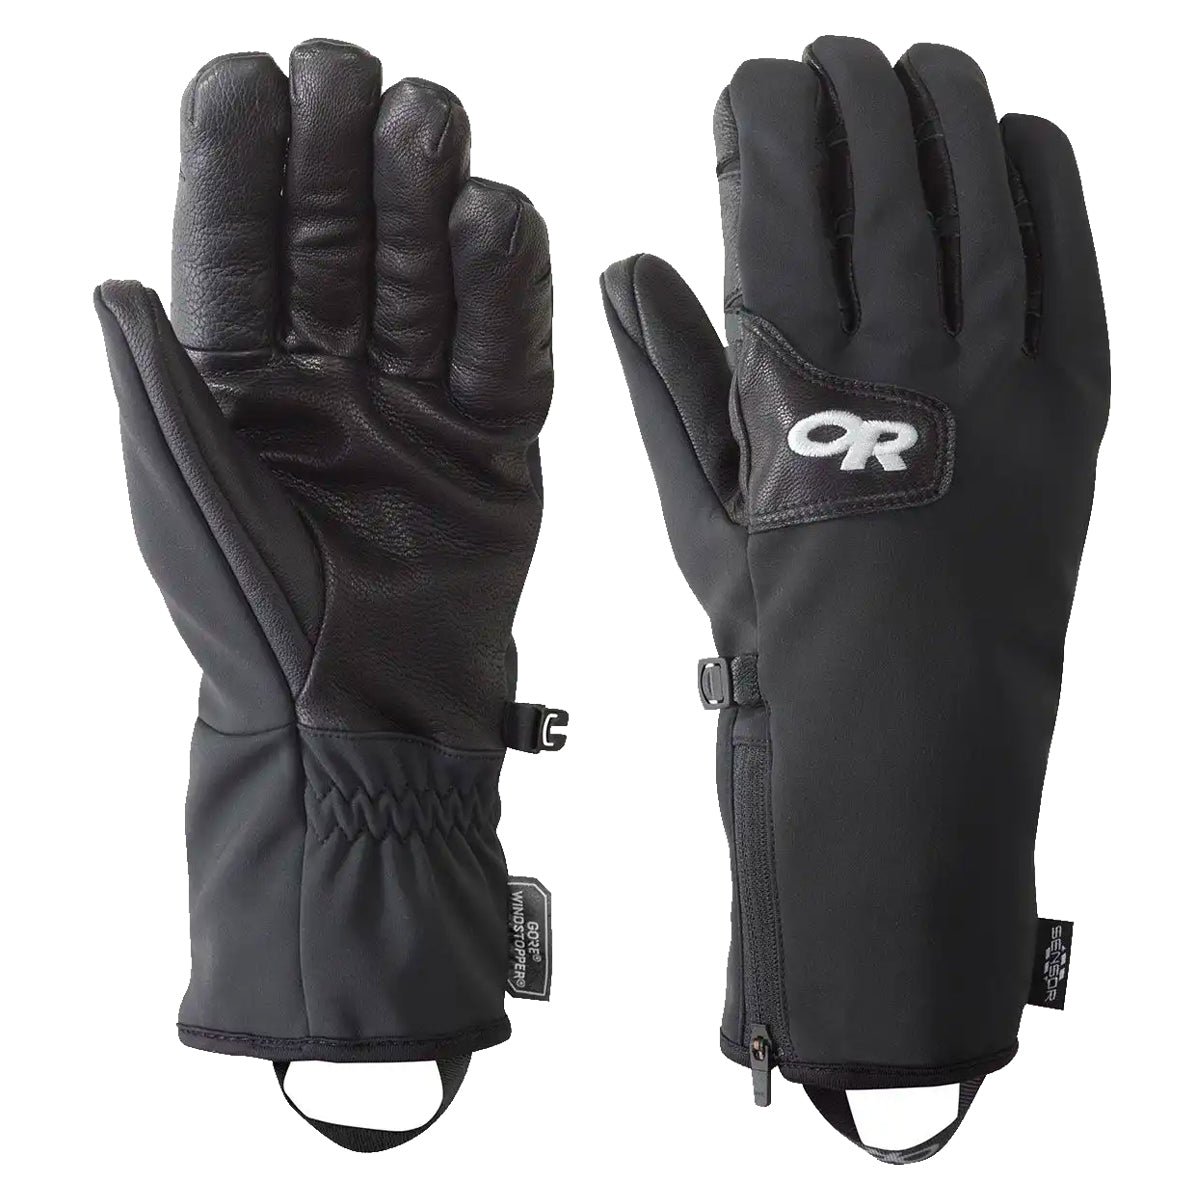 Outdoor Research Men’s Stormtracker Sensor Gloves